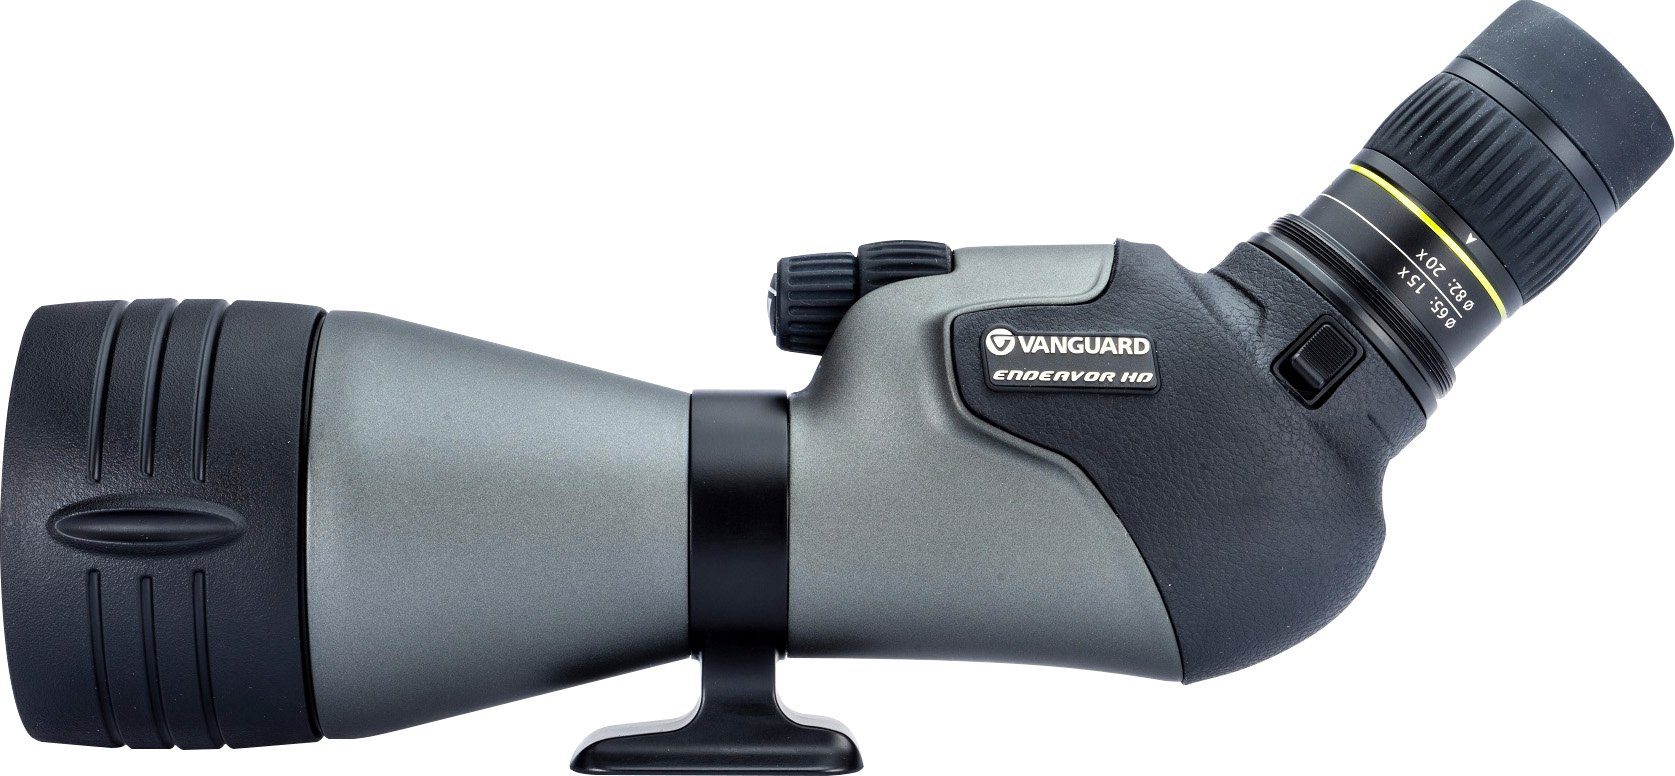 Vanguard ENDEAVOR HD 20-60x82 ED Glass Fernglas (abgewinkeltes Spektiv) | Ferngläser